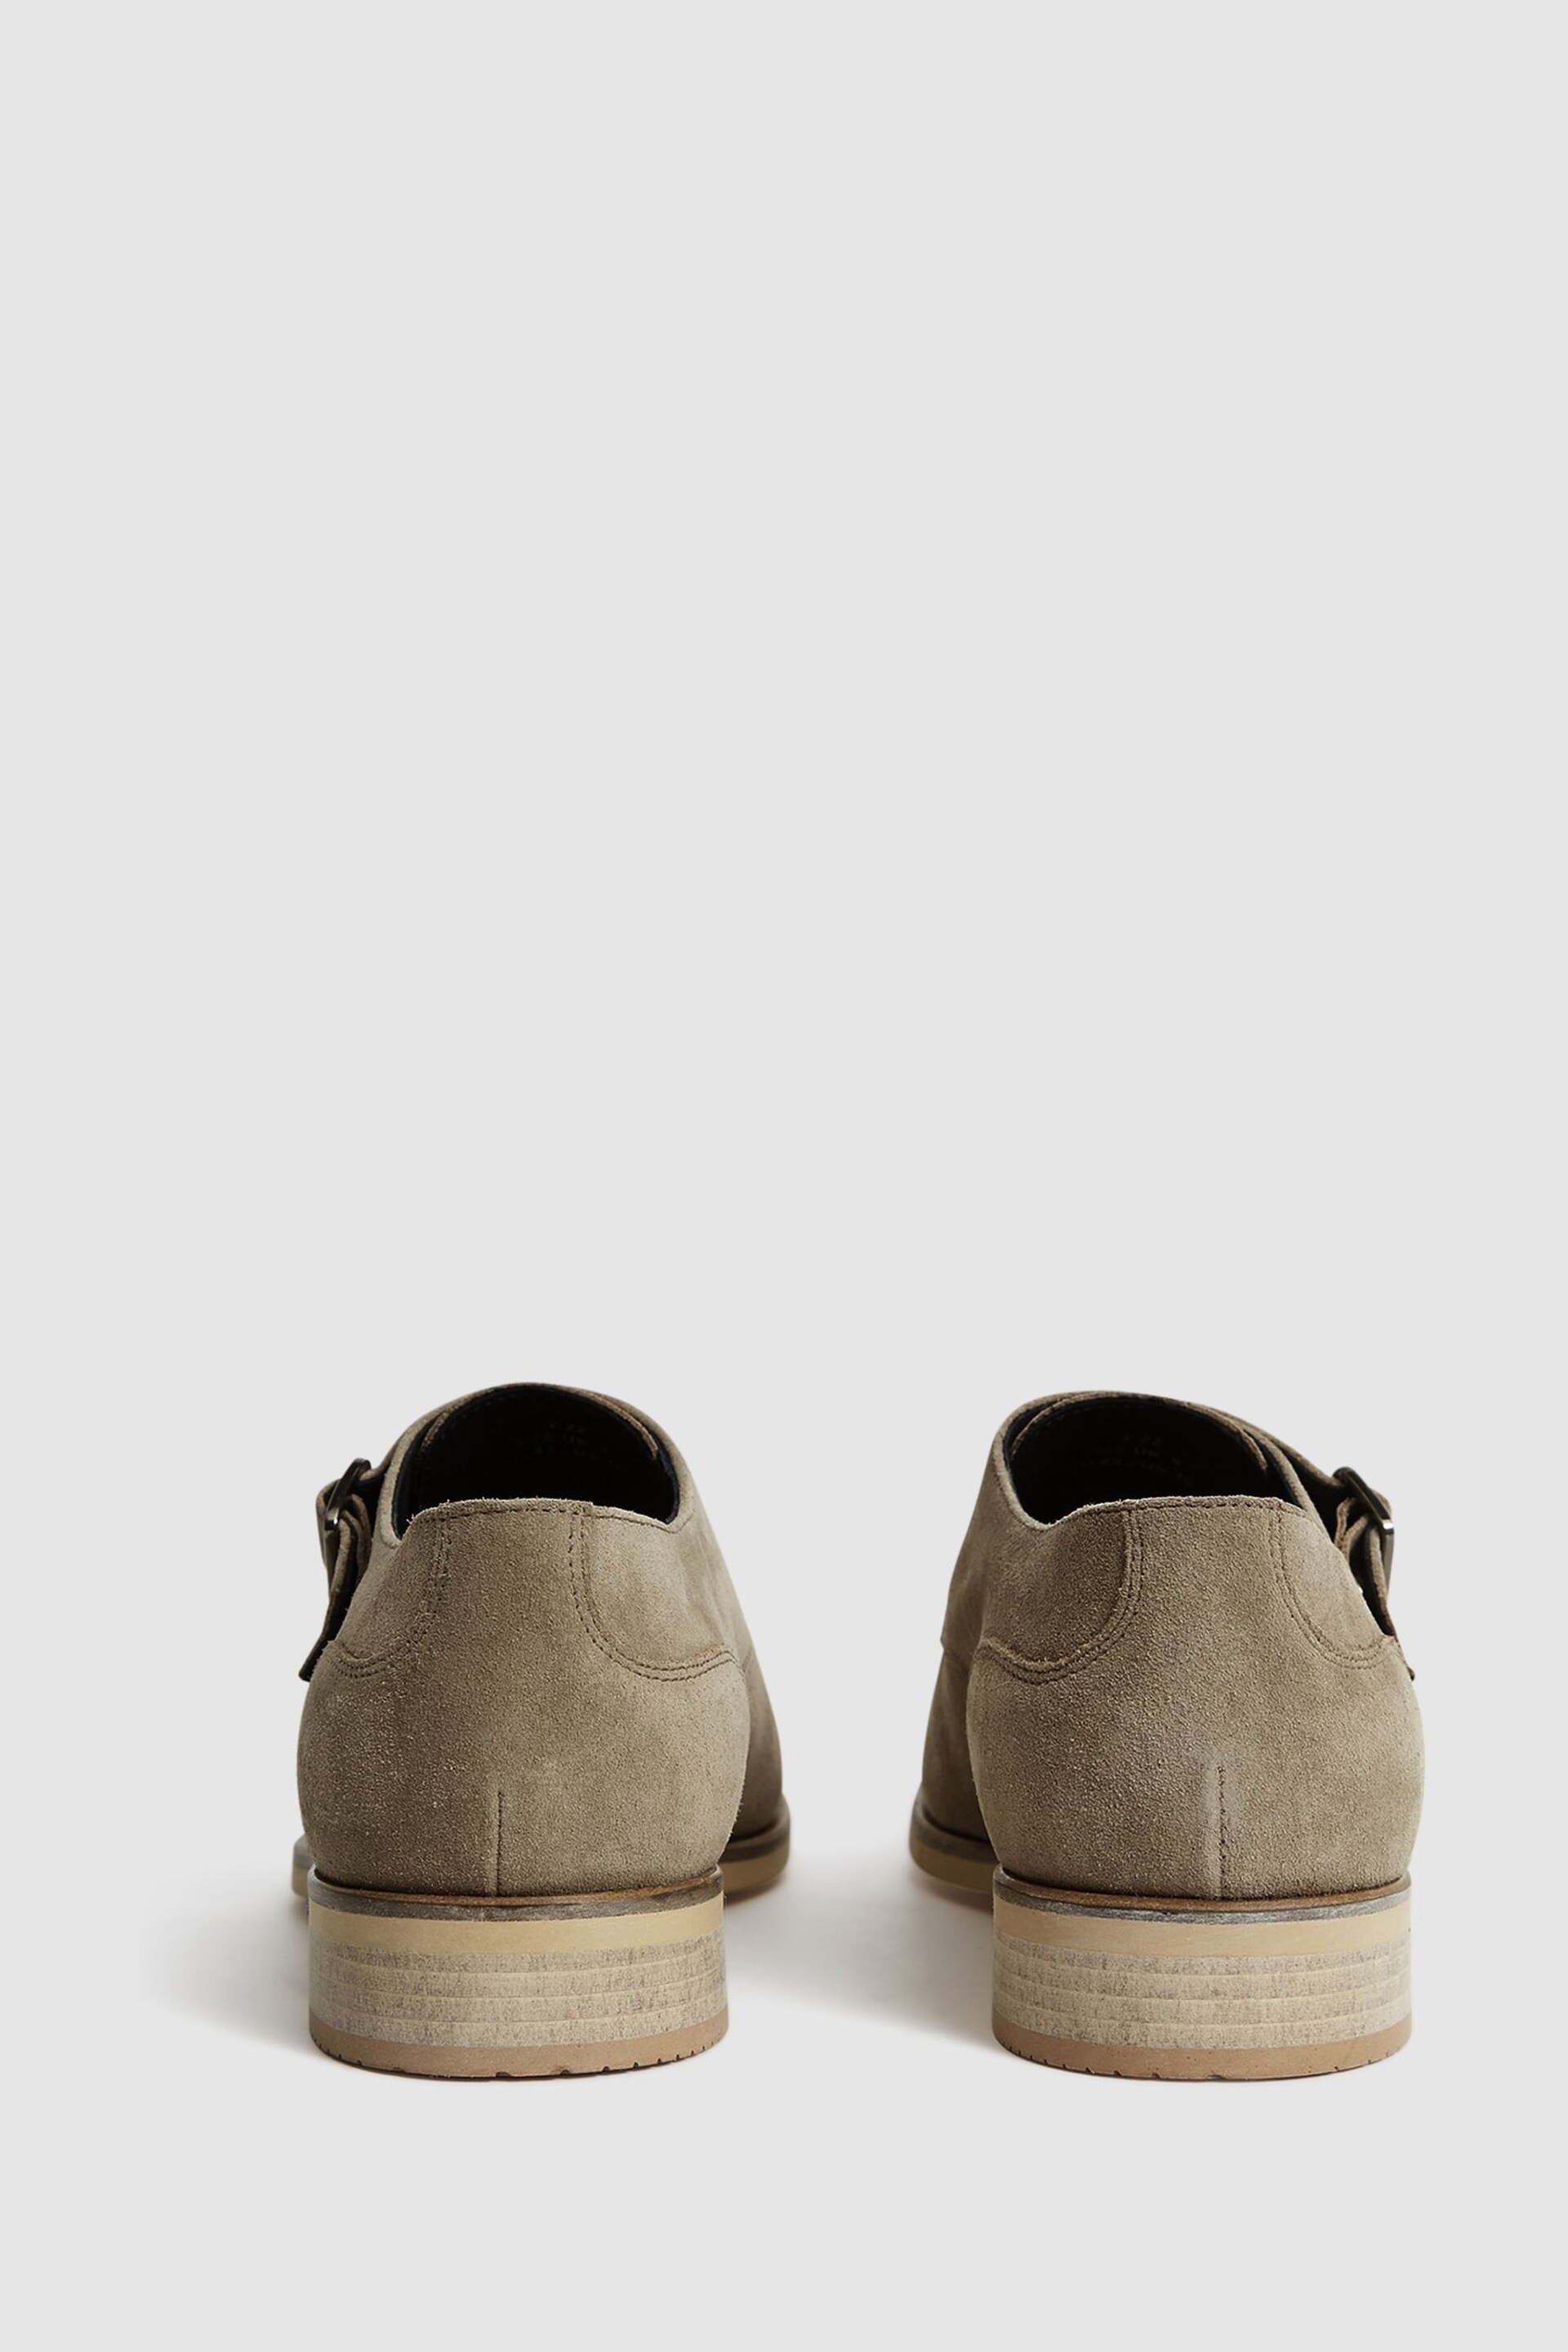 Reiss Stone Rivington Suede Monk Strap Shoes - Image 7 of 7